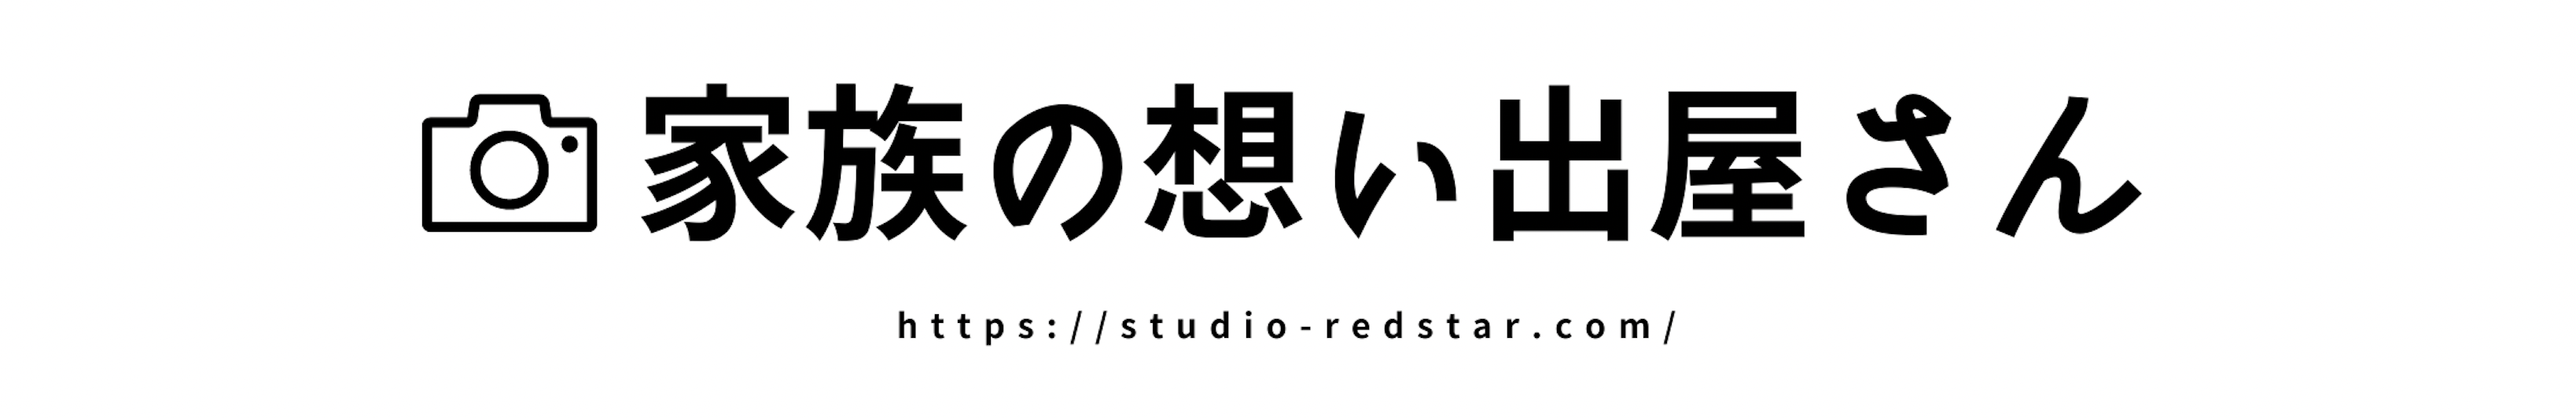 Studio RedStar